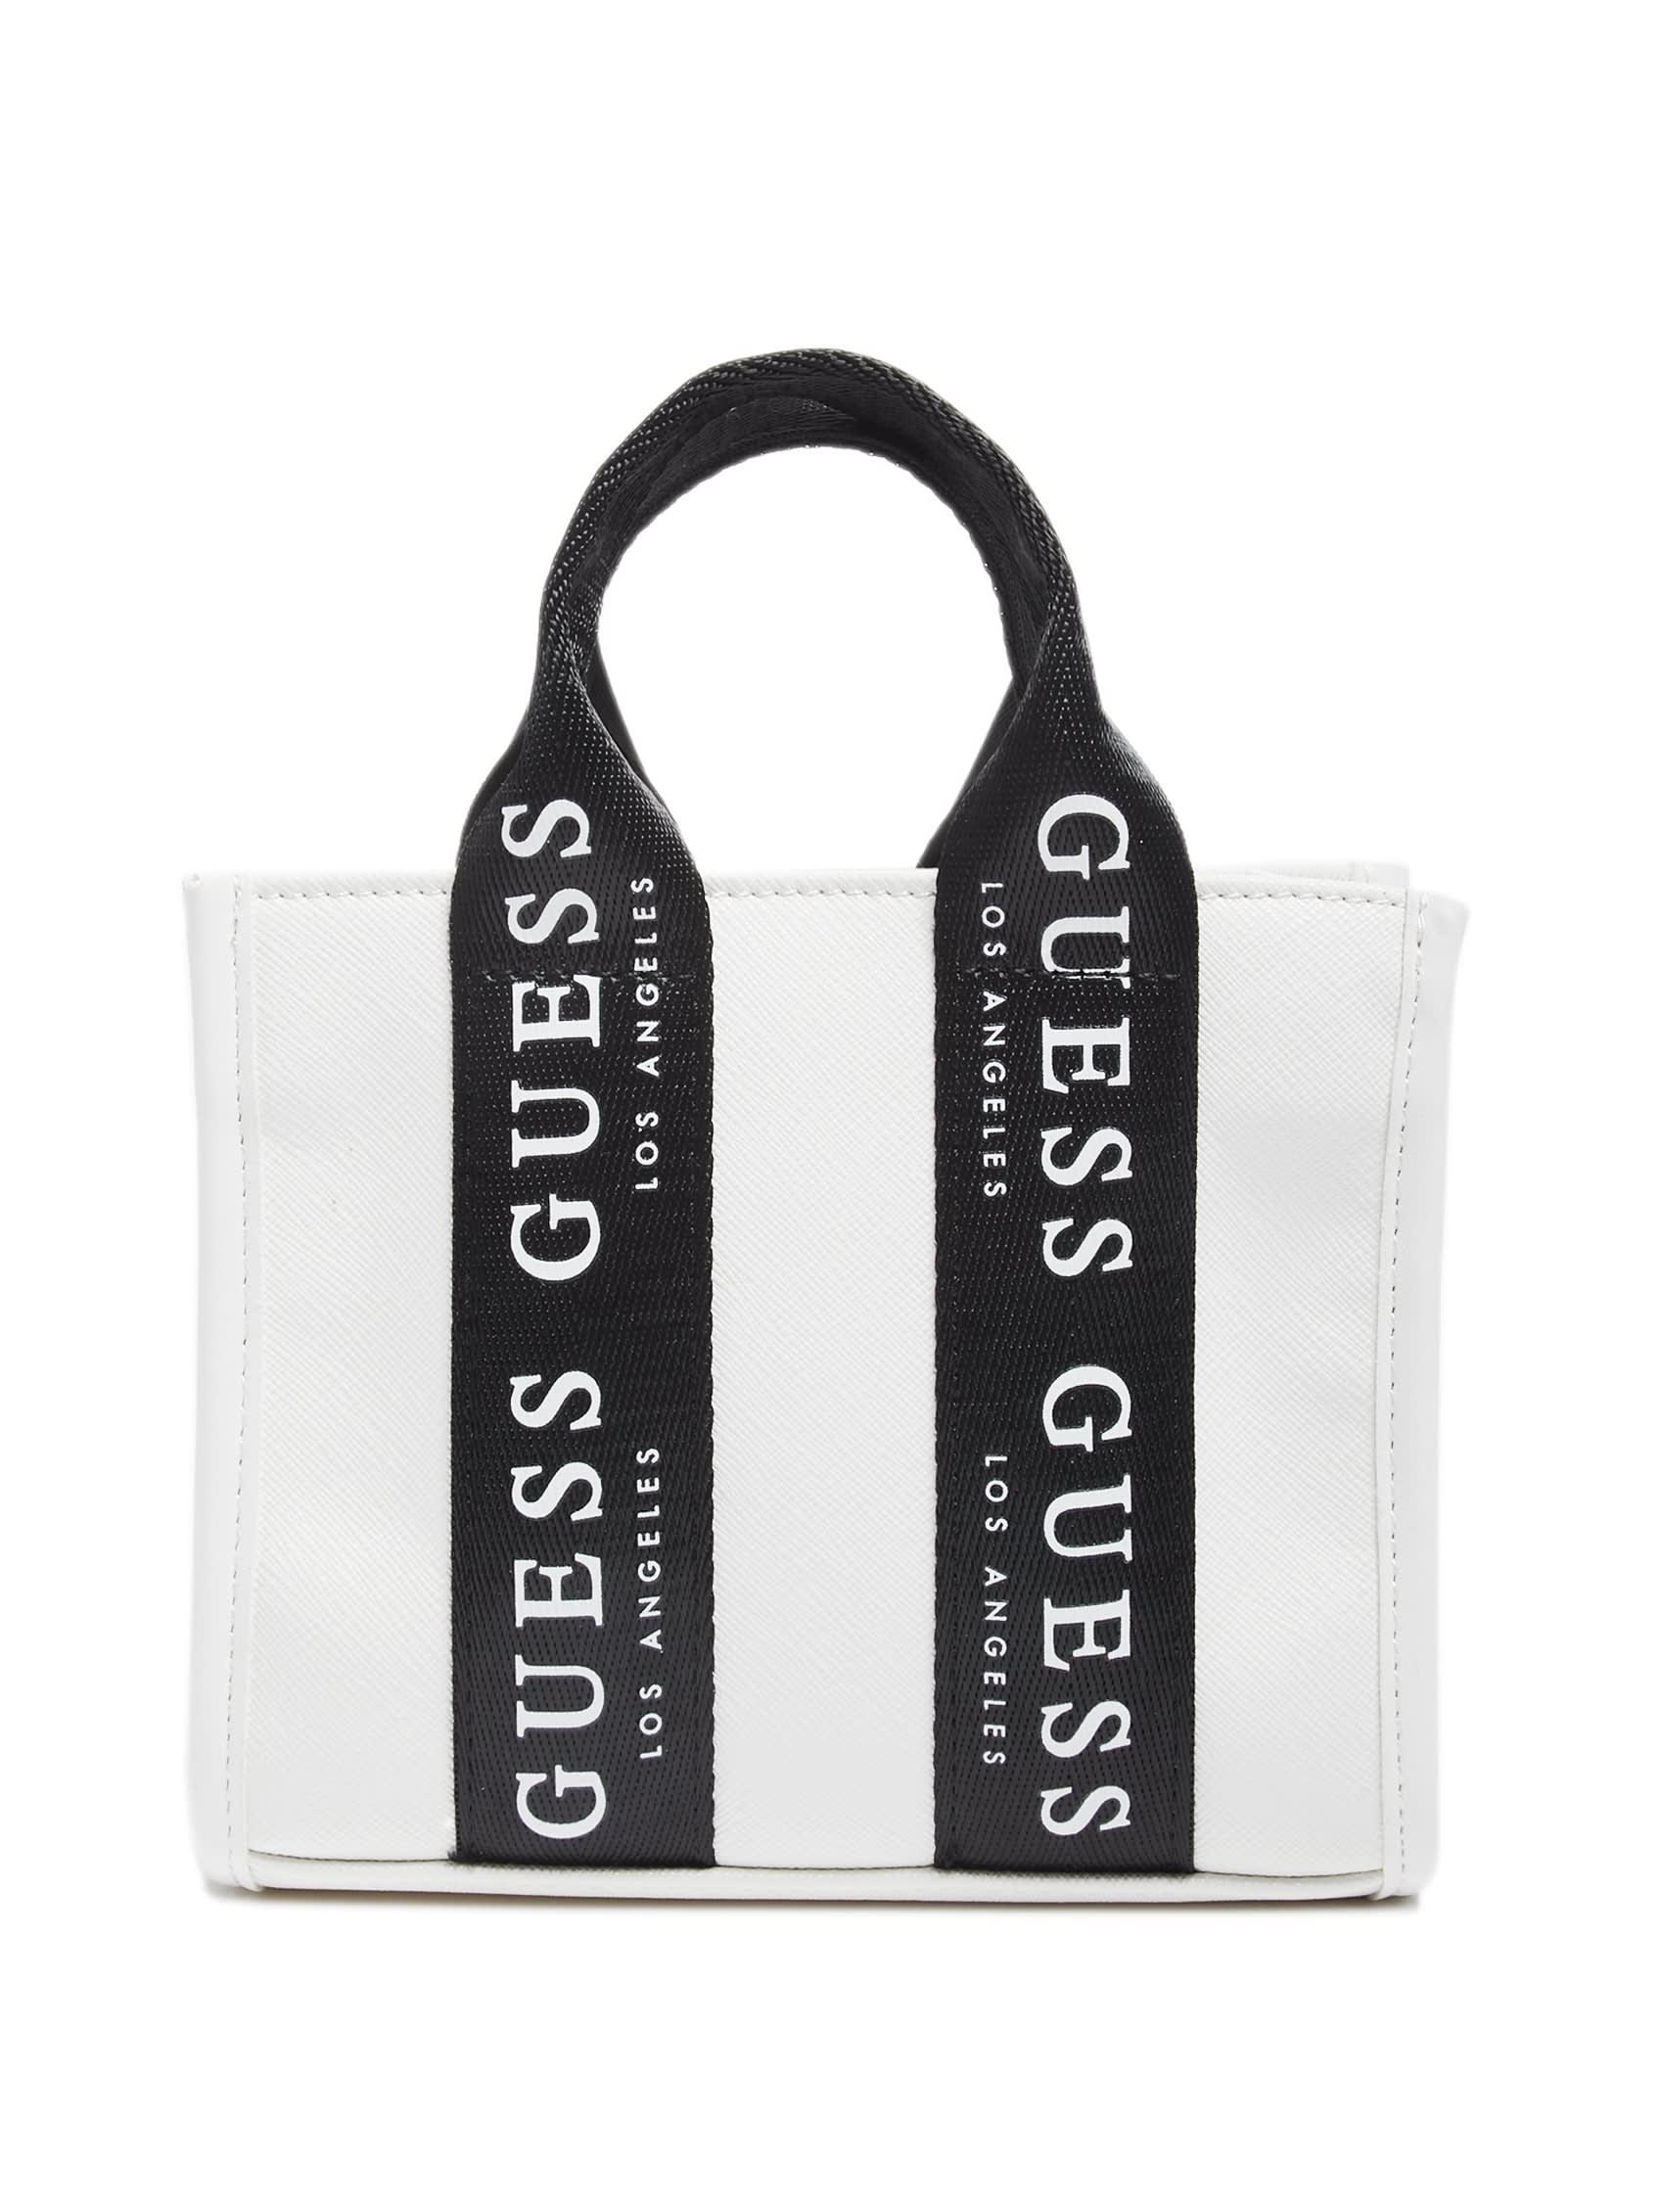 GUESS Logo Bags